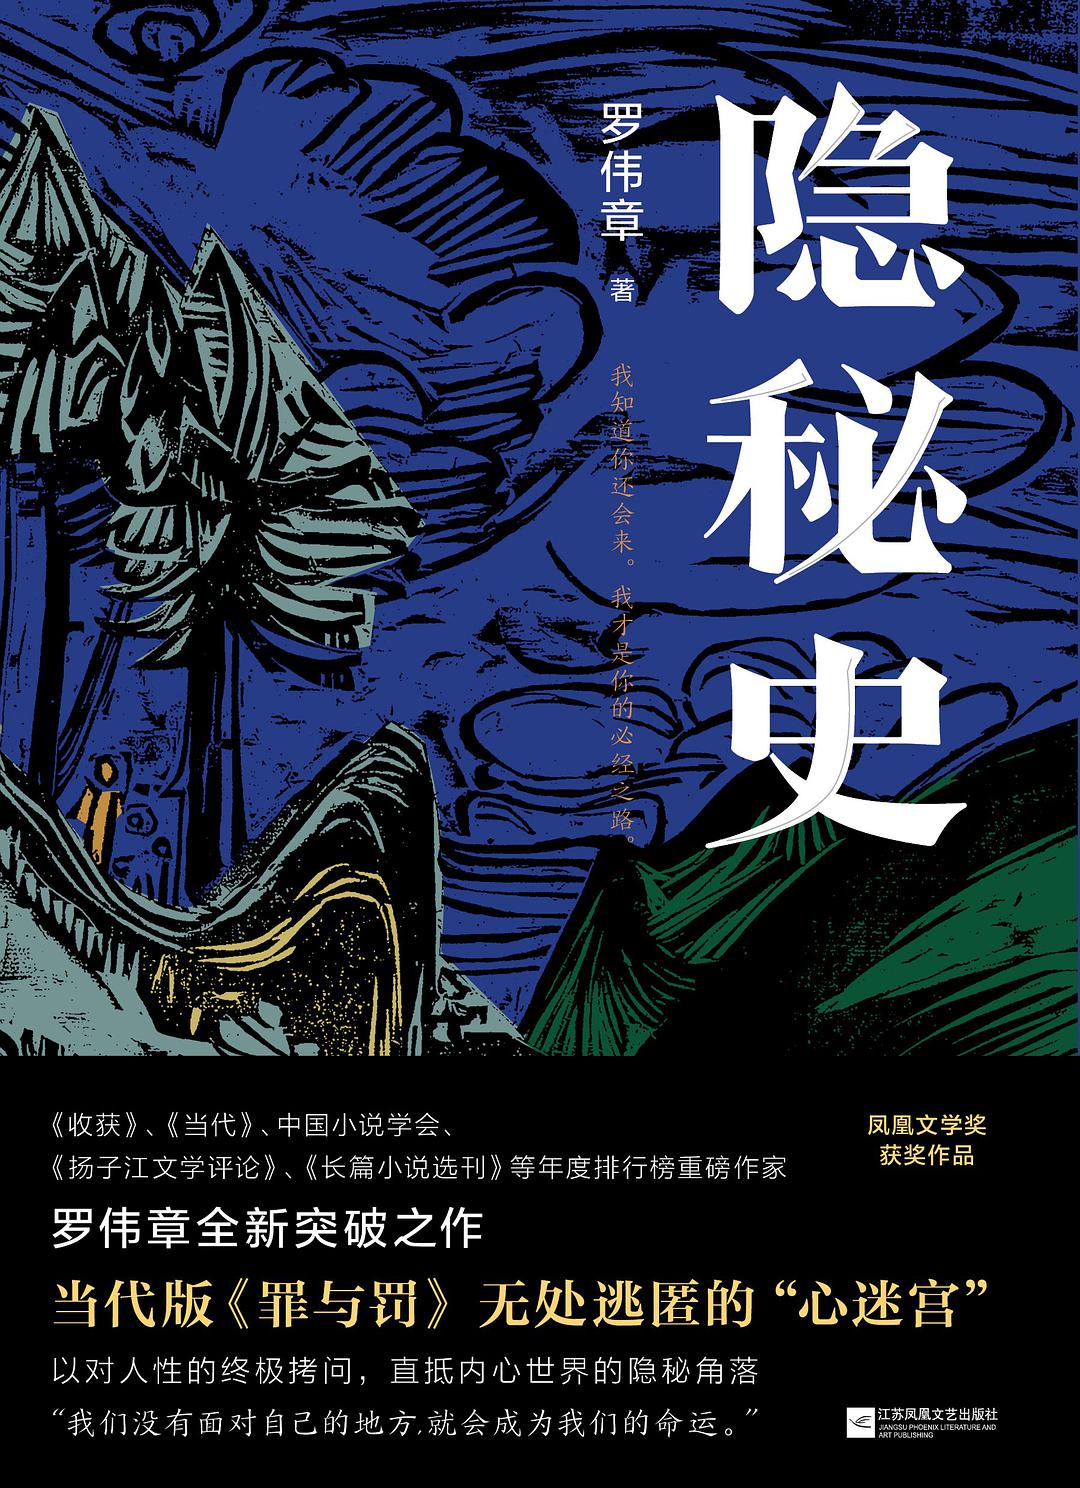 Luo Weizhang "The Hidden History"